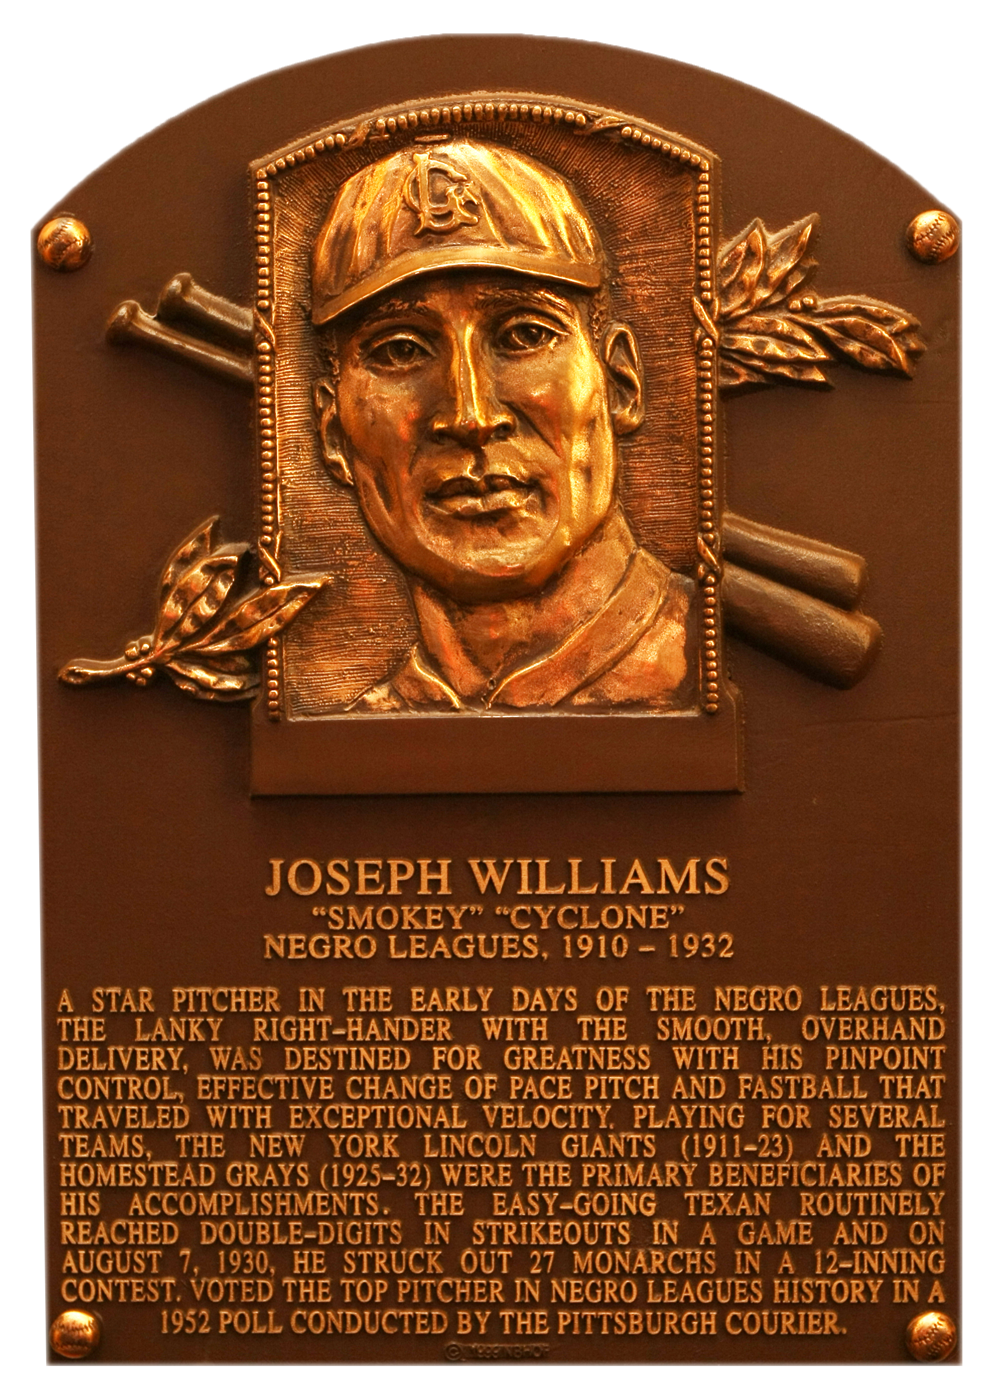 Joe Williams Hall of Fame plaque